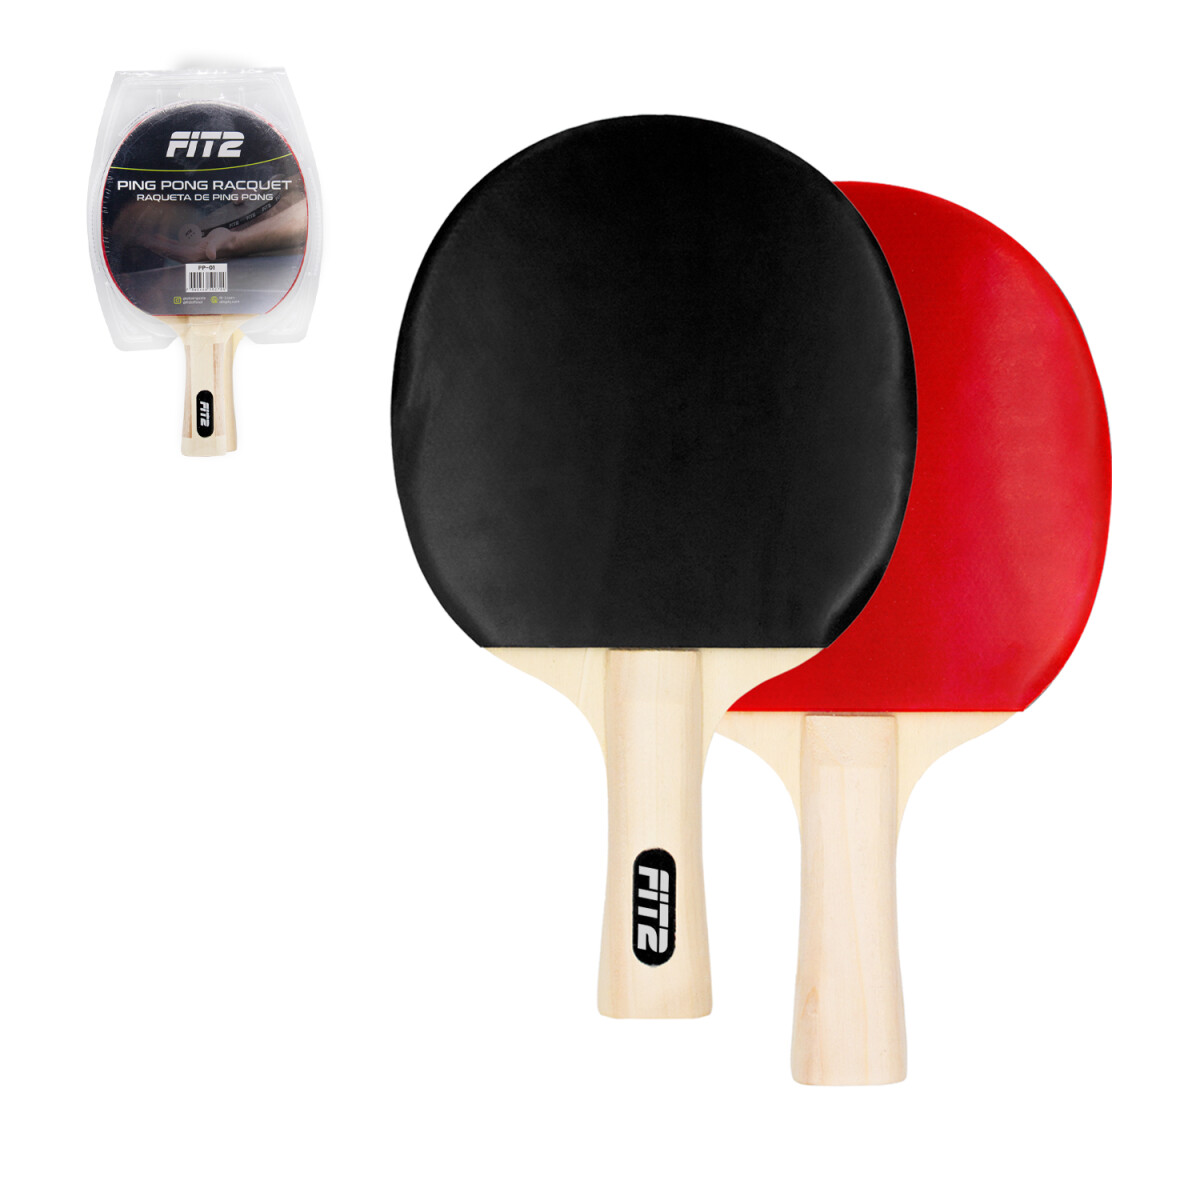 Raqueta De Ping Pong Fit2 - Negro y Rojo 